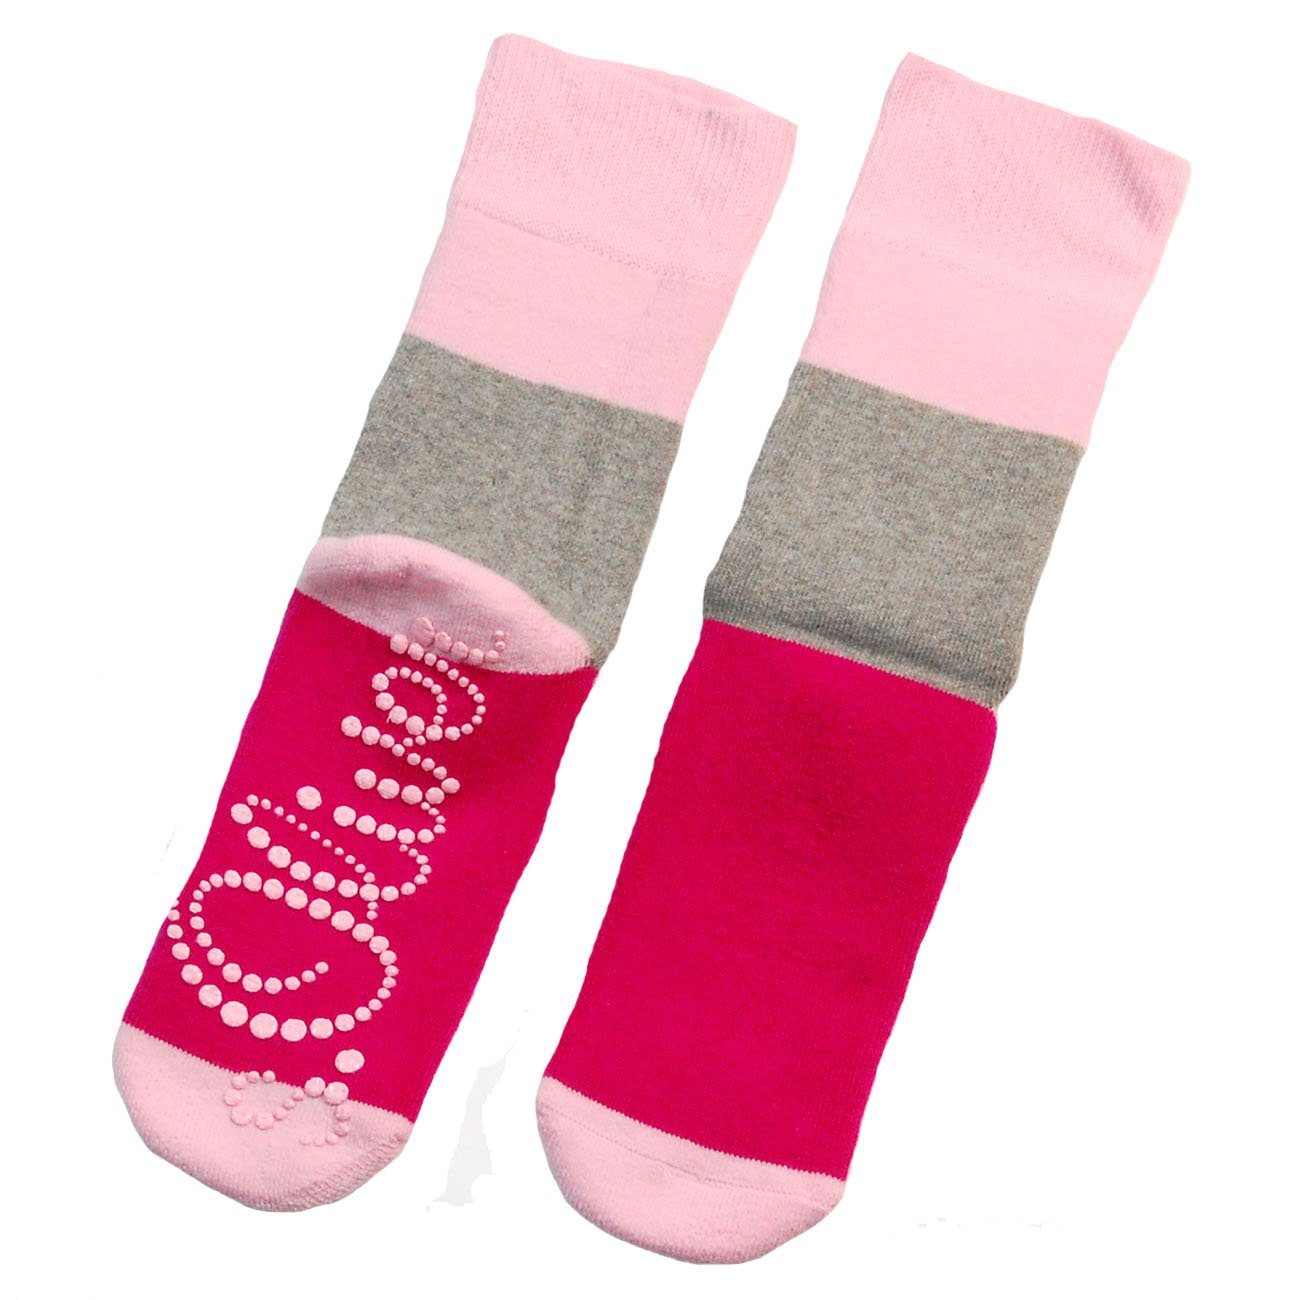 s.Oliver ABS-Socken S20203 (Packung, 1-Paar, 1 Paar) Kinder Socken Jungen Mädchen Baumwolle Kindersocken mit ABS-Noppen